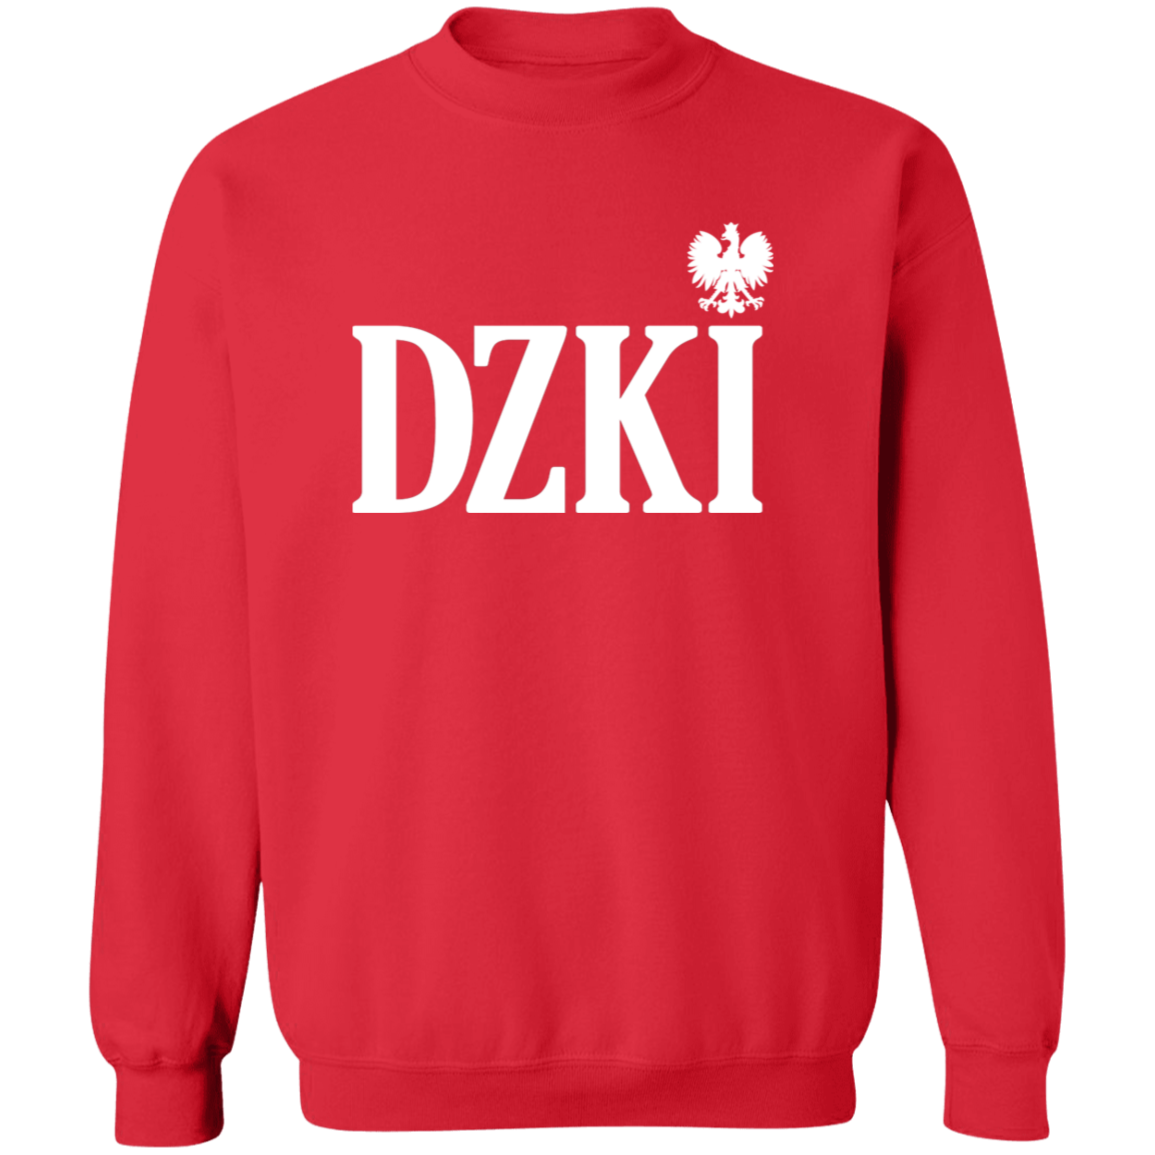 DZKI Polish Surname Ending Apparel CustomCat G180 Crewneck Pullover Sweatshirt Red S